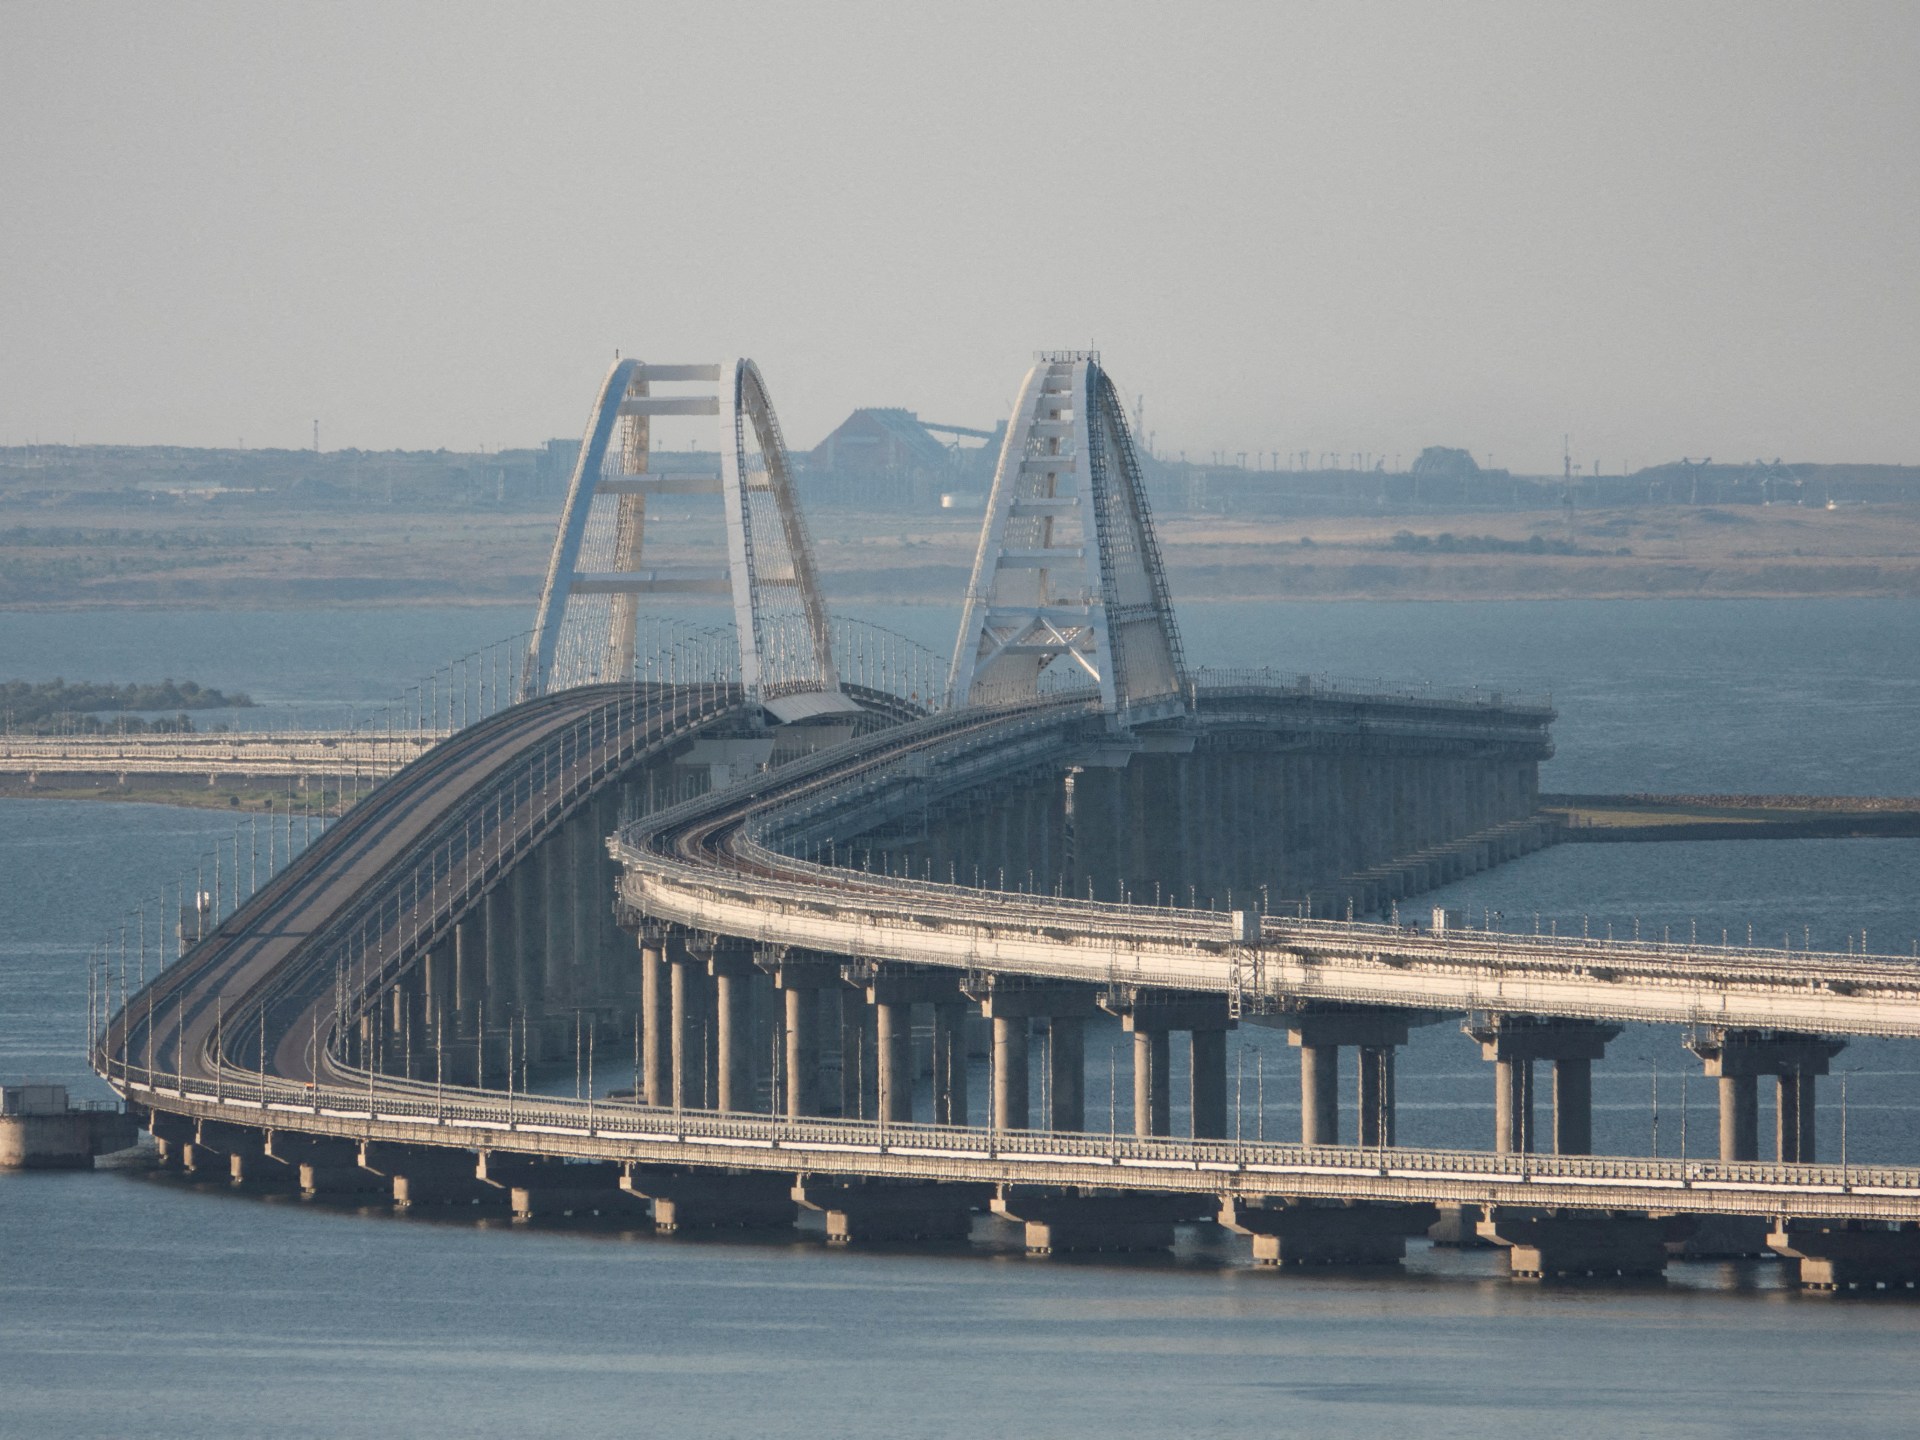 Dua tewas, anak terluka dalam ‘darurat’ di jembatan Krimea Rusia |  Berita perang Rusia-Ukraina